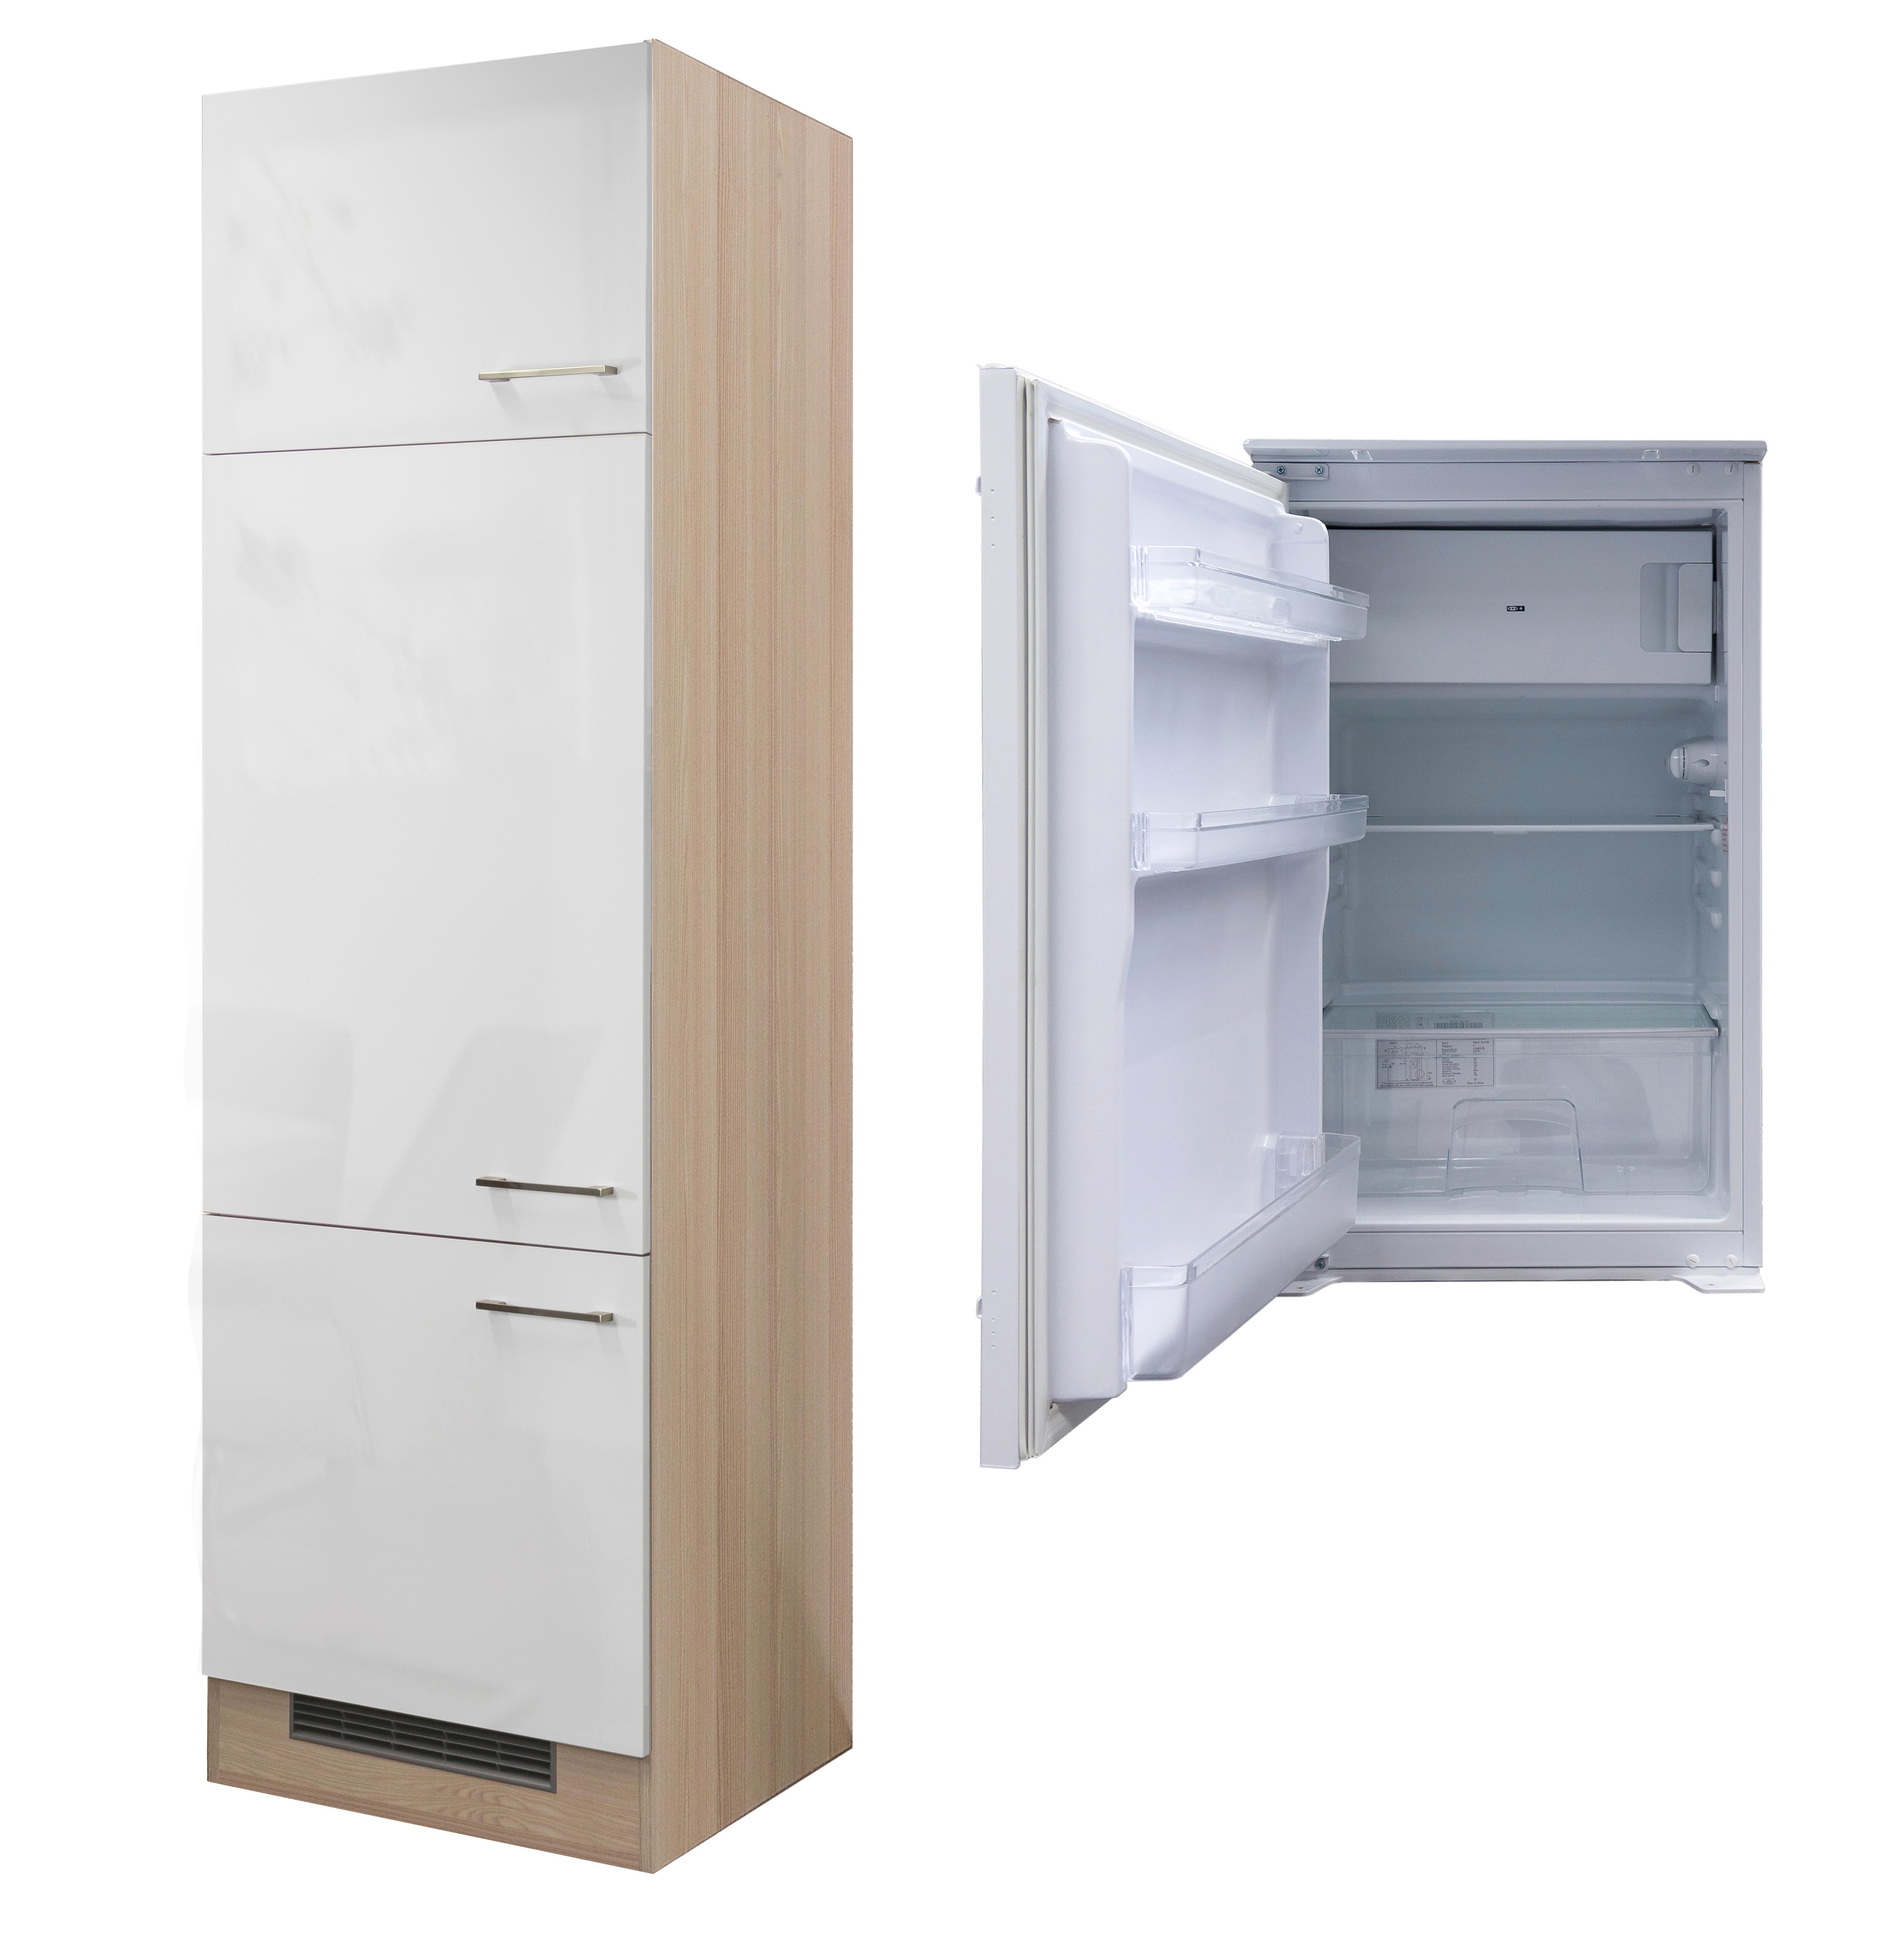 Geräteumbauschrank mit integriertem Kühlschrank